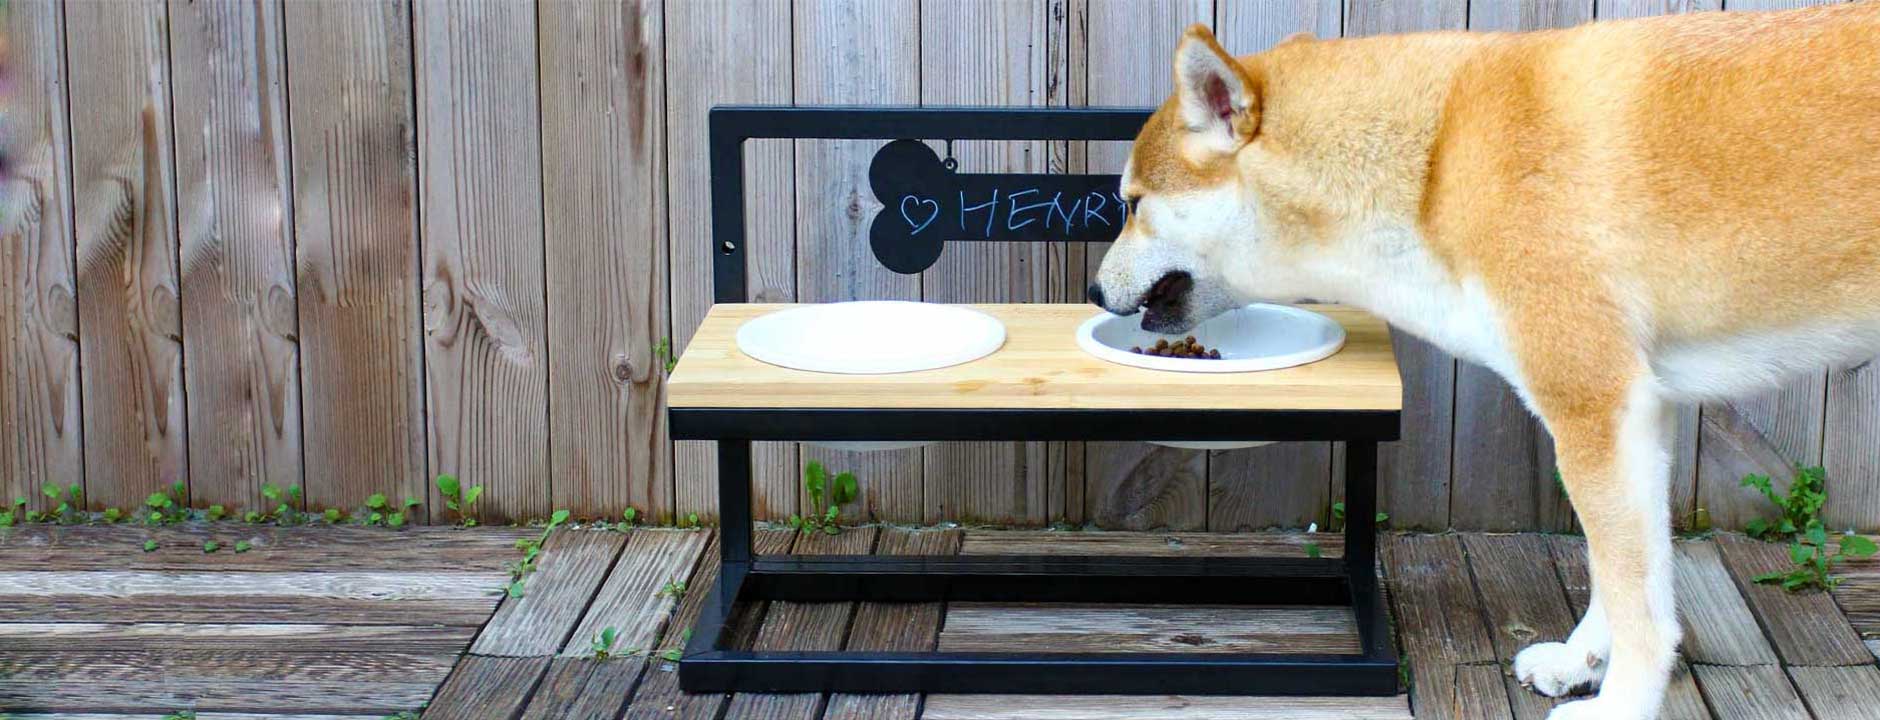 Elevated-Dog-Bowls-Adjustable-3-Heights-Steel-Frame-Raise-Pet-Feeder-Dog-Ceramic-Food-Water-Bowls-outdoor